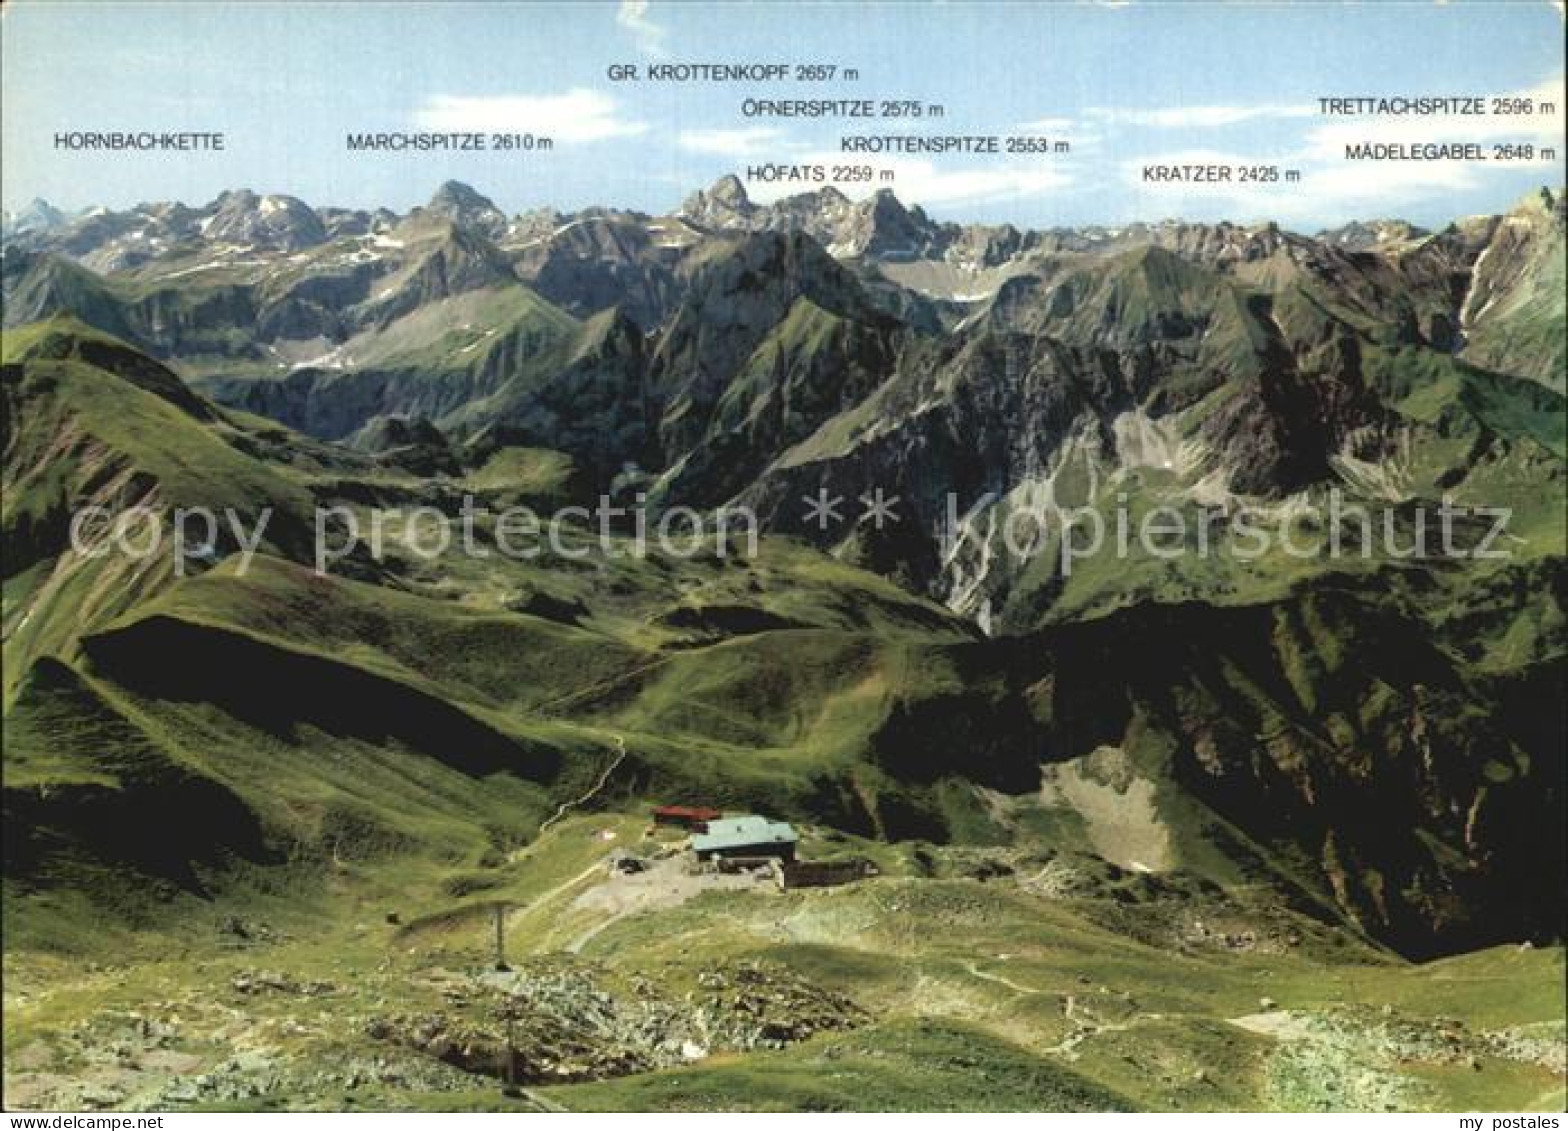 72519316 Nebelhorn Bergstation Tiroler Allgaeuer Hochgebirge Anatswald - Oberstdorf